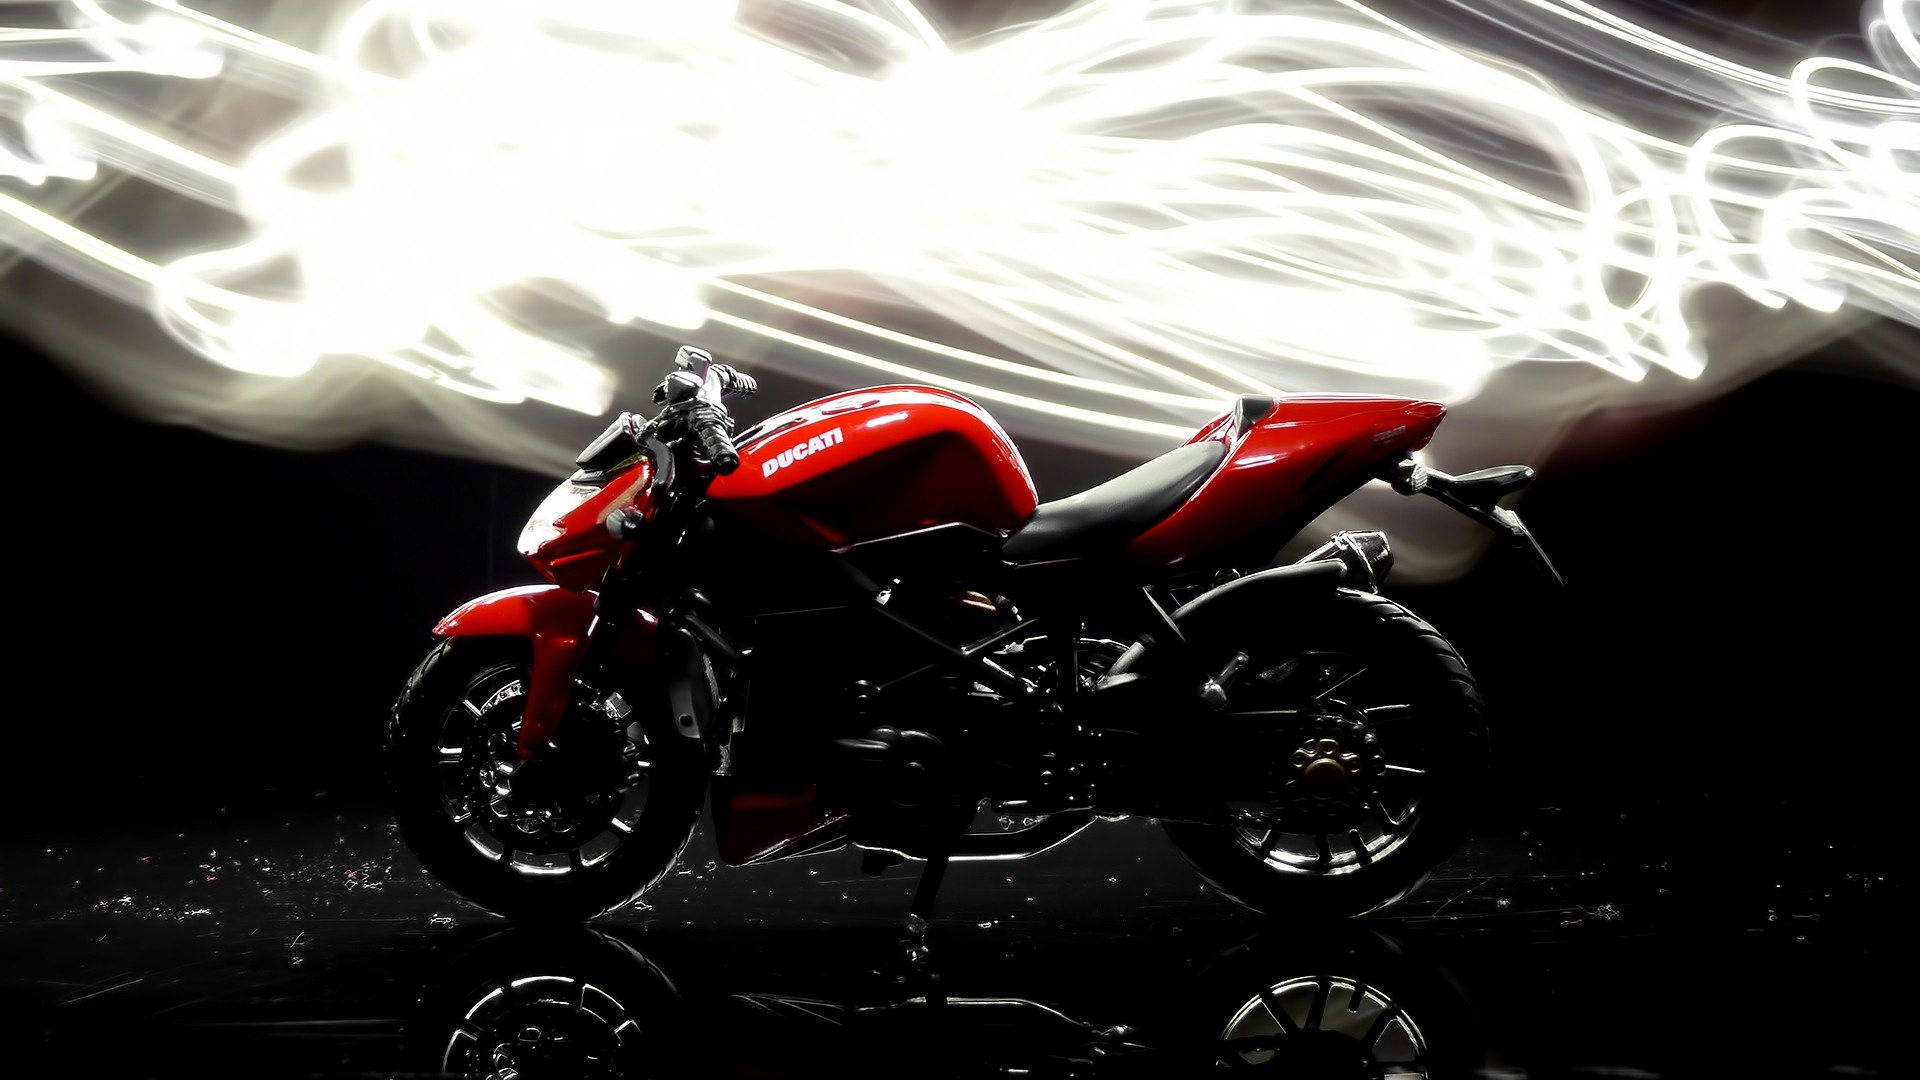 1920x1080 Hd Bikes Red Ducati 1199 Background